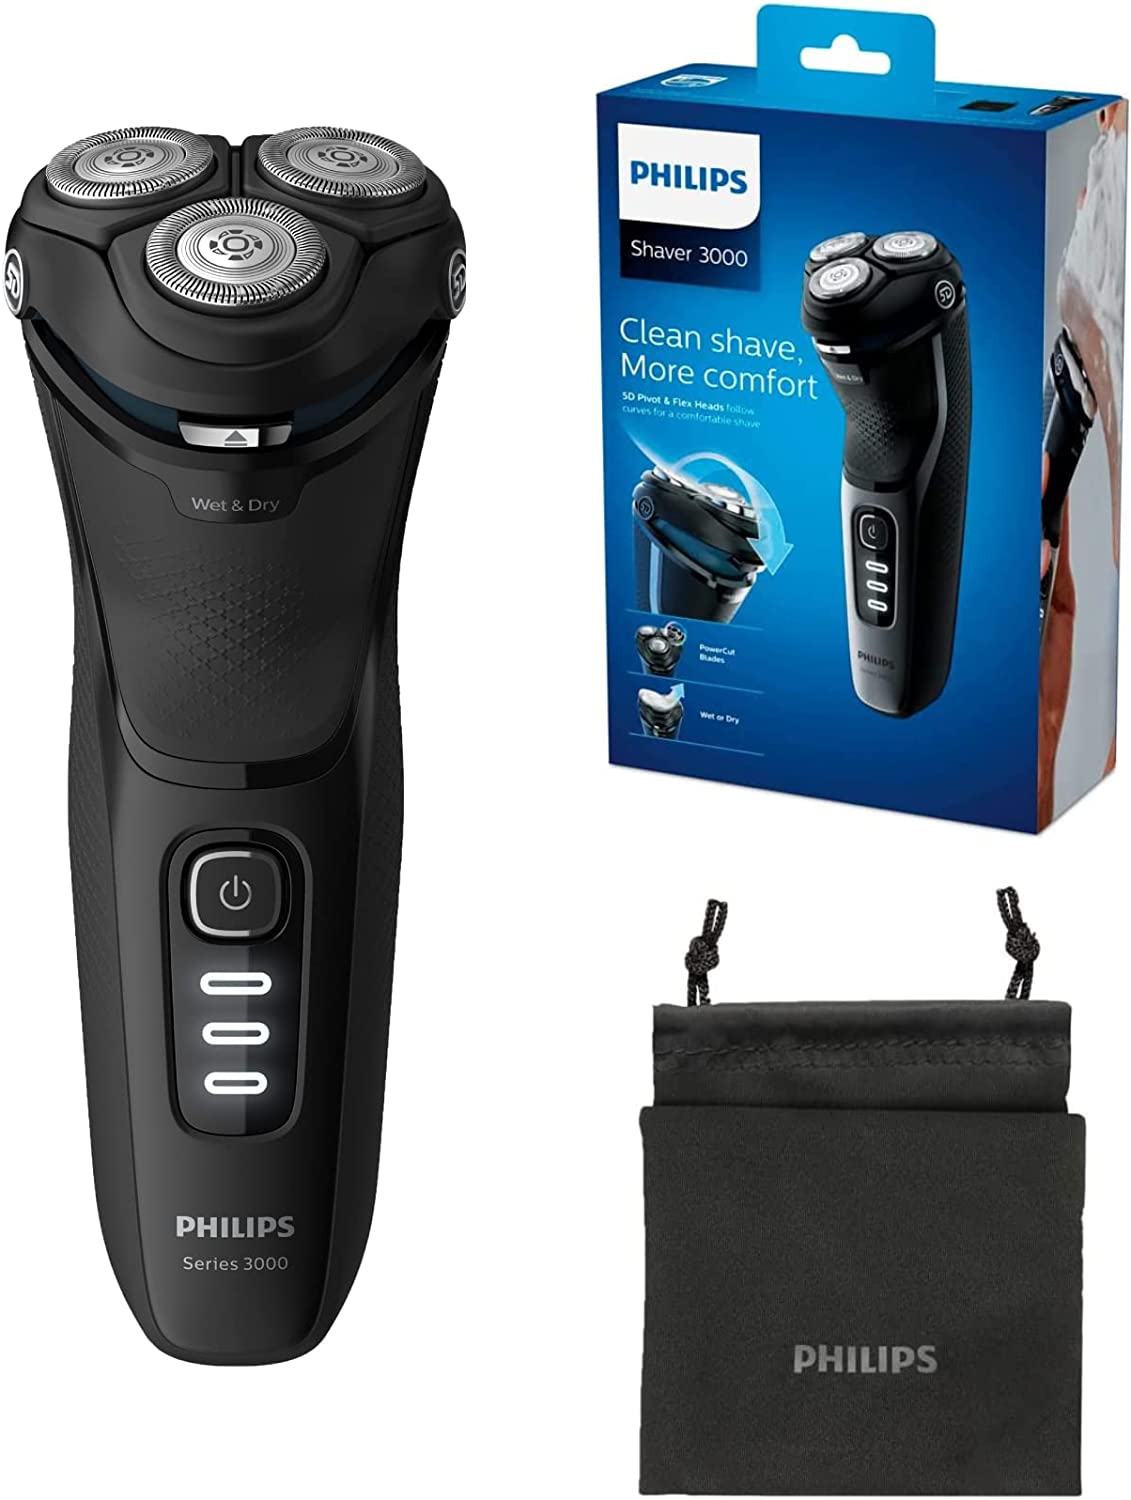 Philips Shaver Series 3000 versus Philips Shaver Series 7000 versus Philips Shaver Series 5000 versus Philips Shaver Series 9000